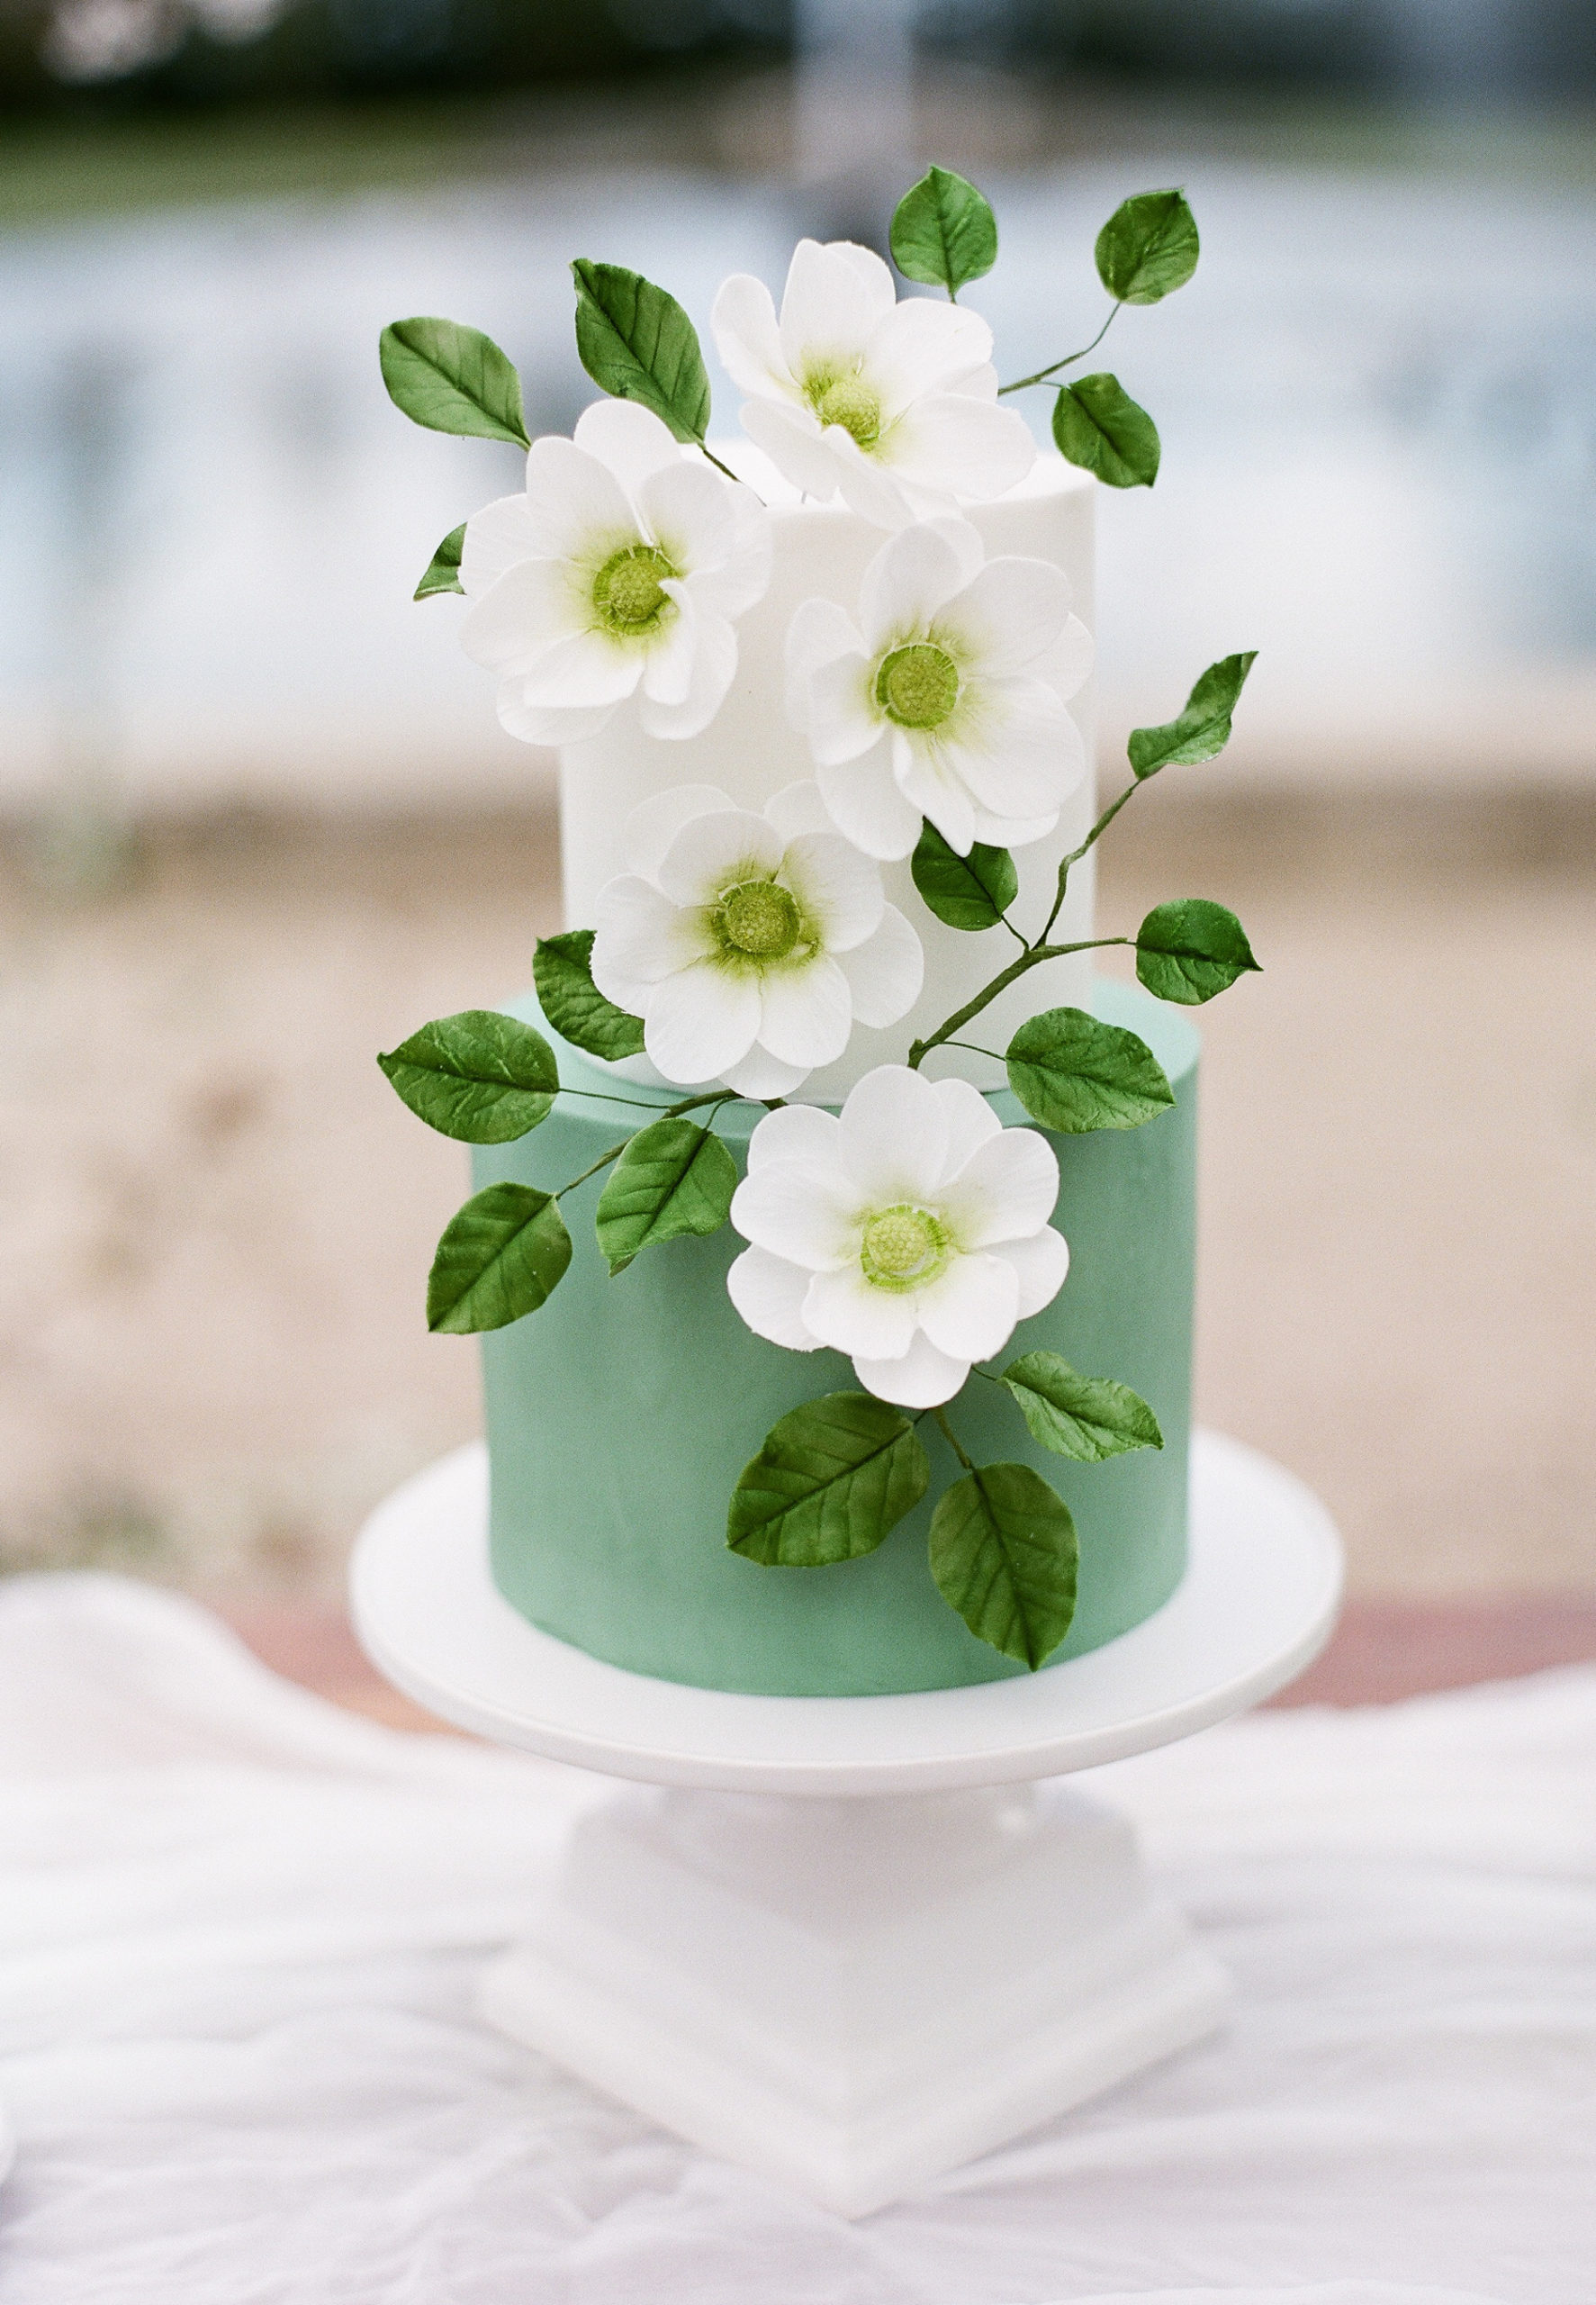 gateau de mariage vert et blanc made in cake